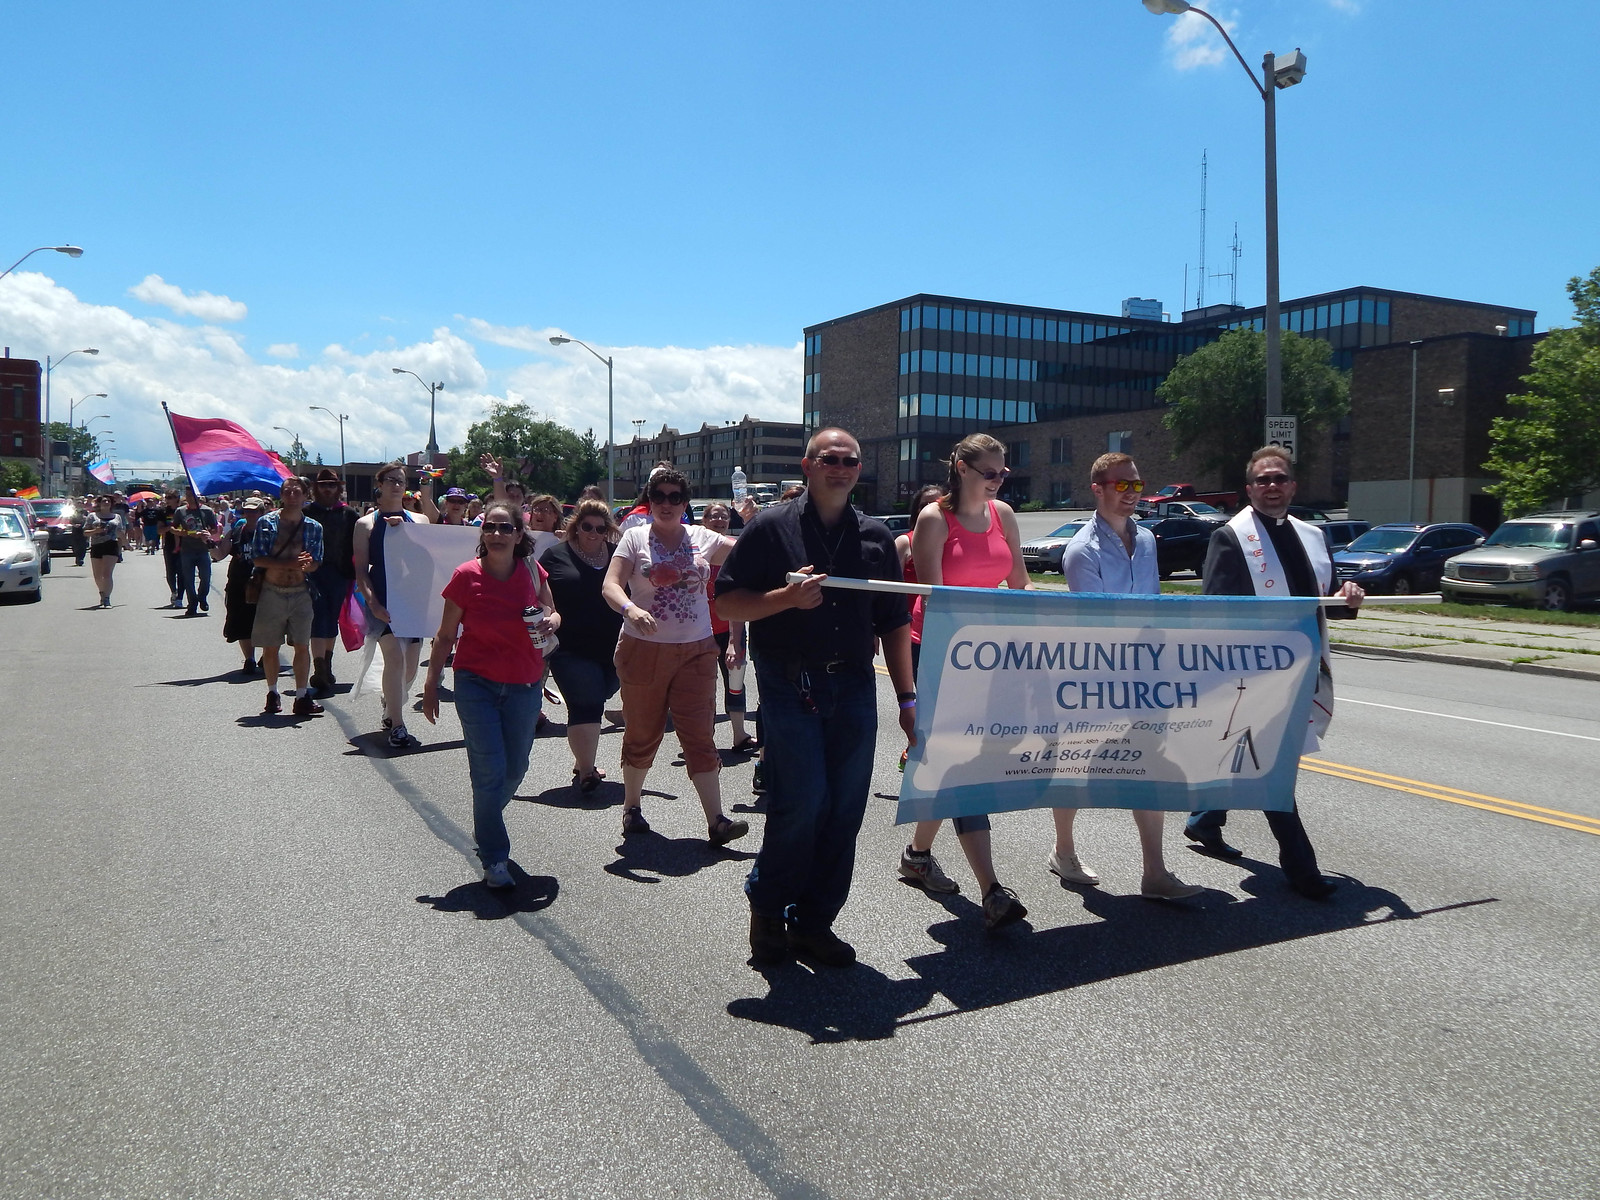 Community United Church in Pride Parade